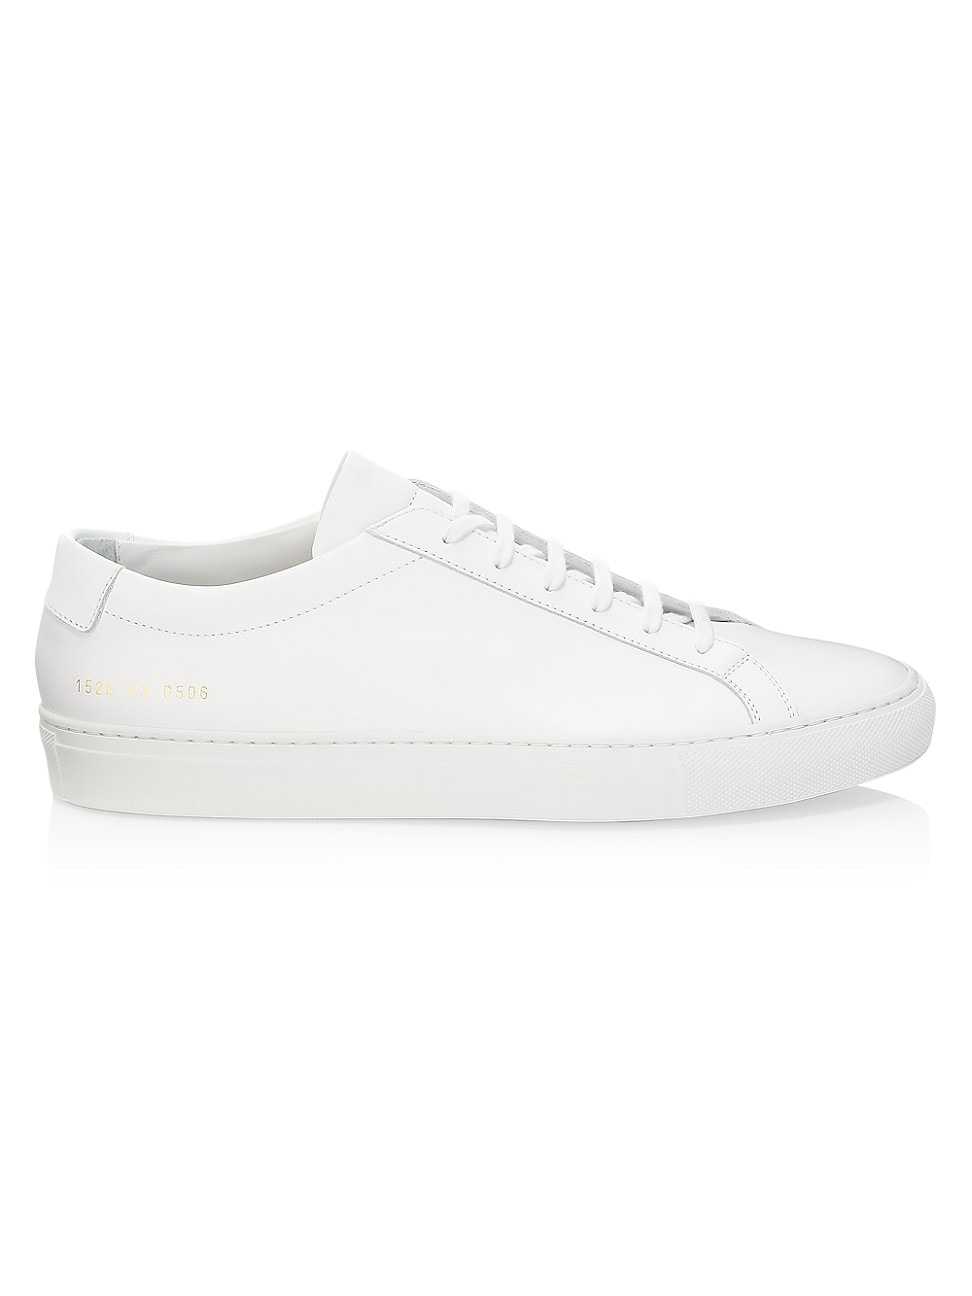 Men's Original Achilles Leather Low-Top Sneakers - White - Size 13